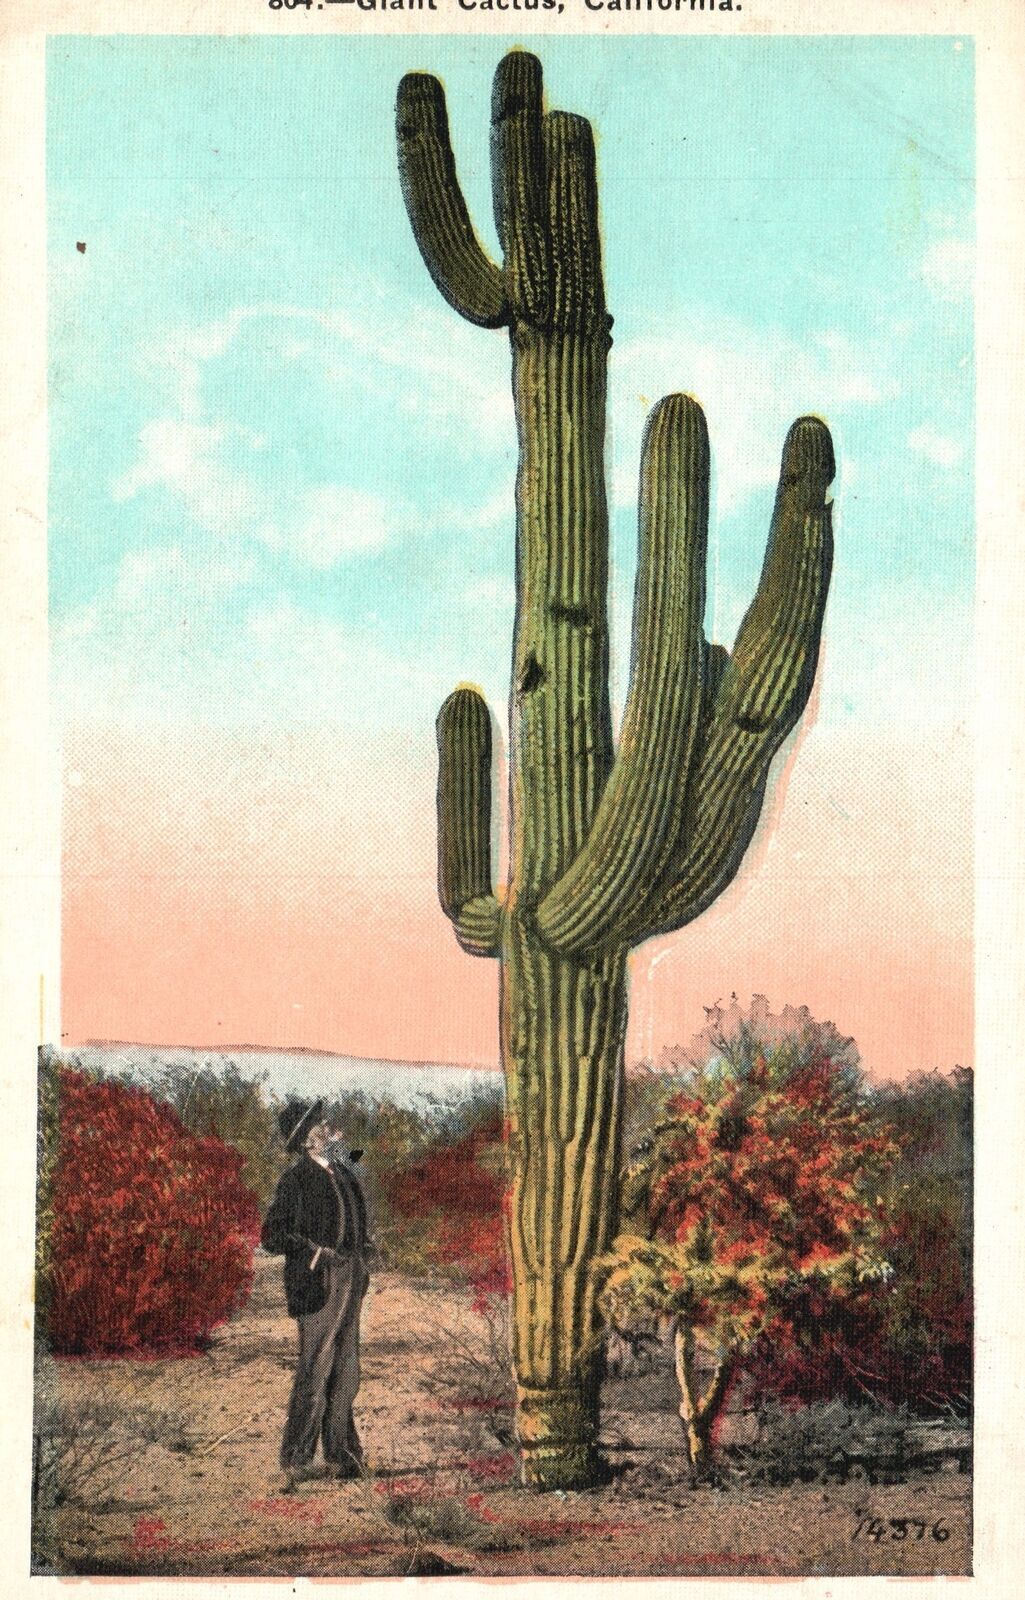 Vintage Postcard Giant Cactus Desert Plant Man Standing California M. Kashower